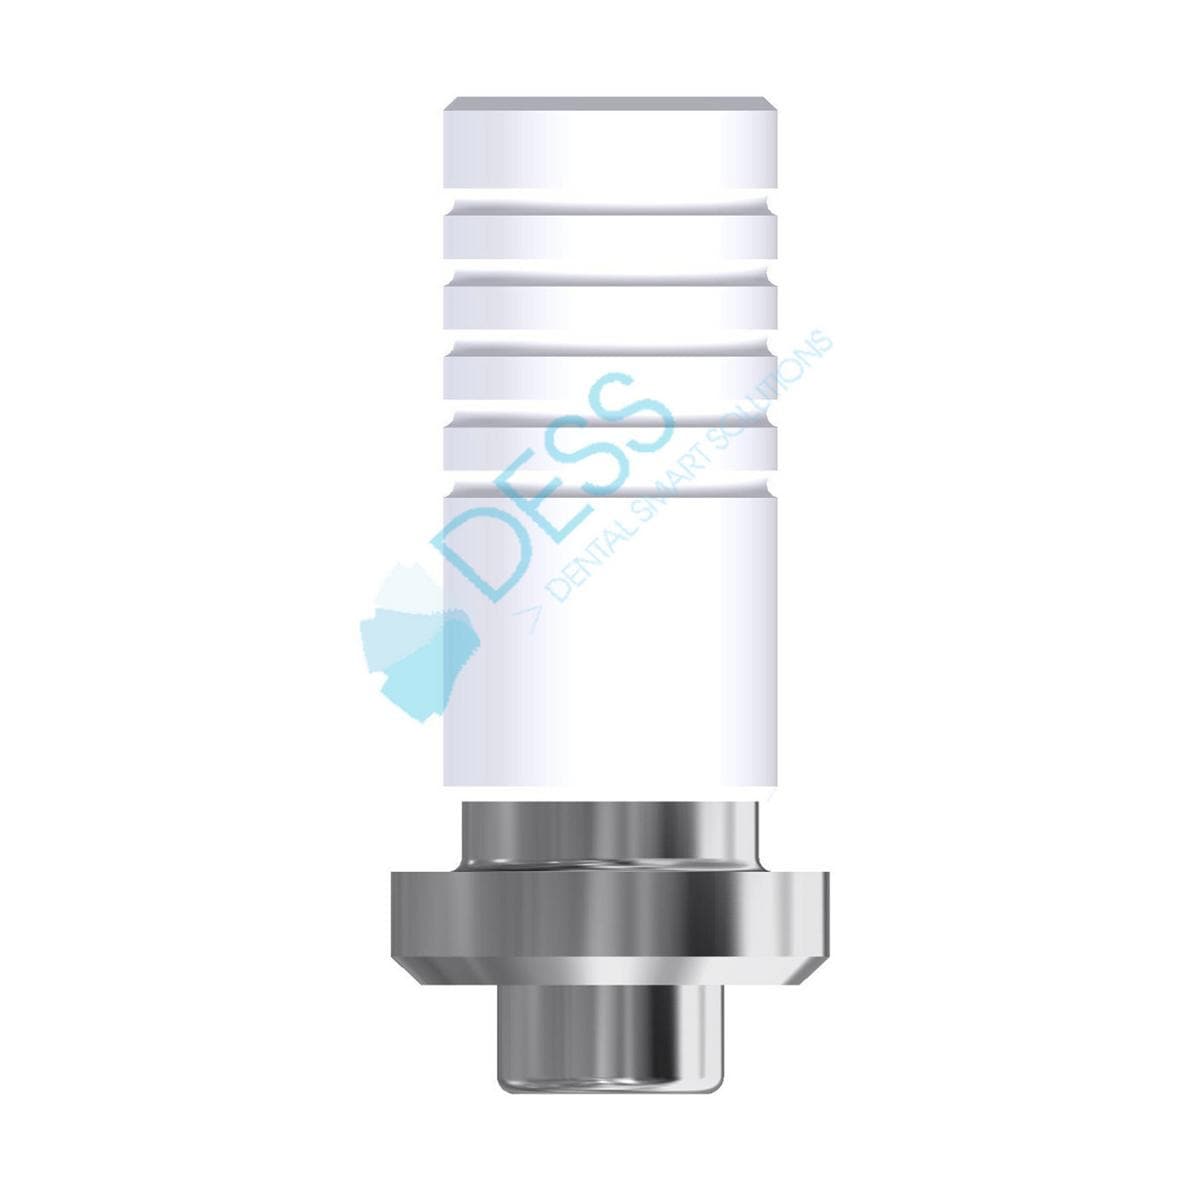 Kobald-Chrom Base auf Implantat - kompatibel mit Astra Tech™ Osseospeed™ - Aqua (RP) Ø 3,5 mm - 4,0 mm, ohne Rotationsschutz